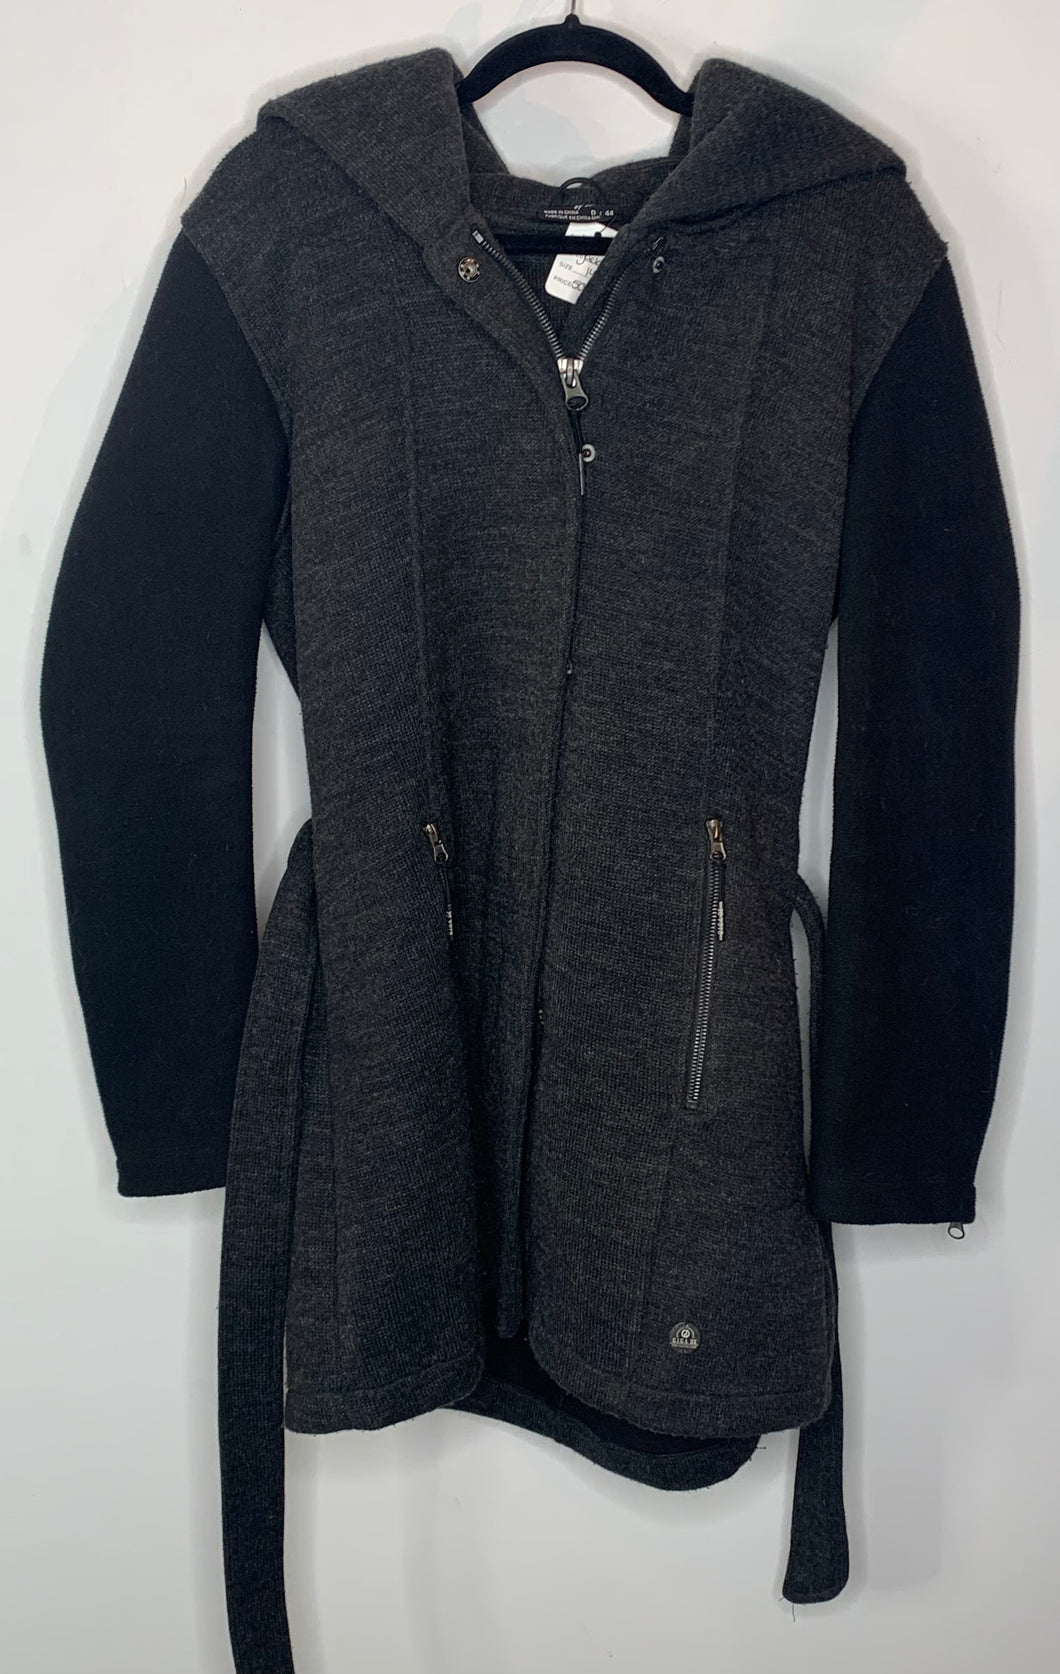 Grey and Black Hooded Jacket